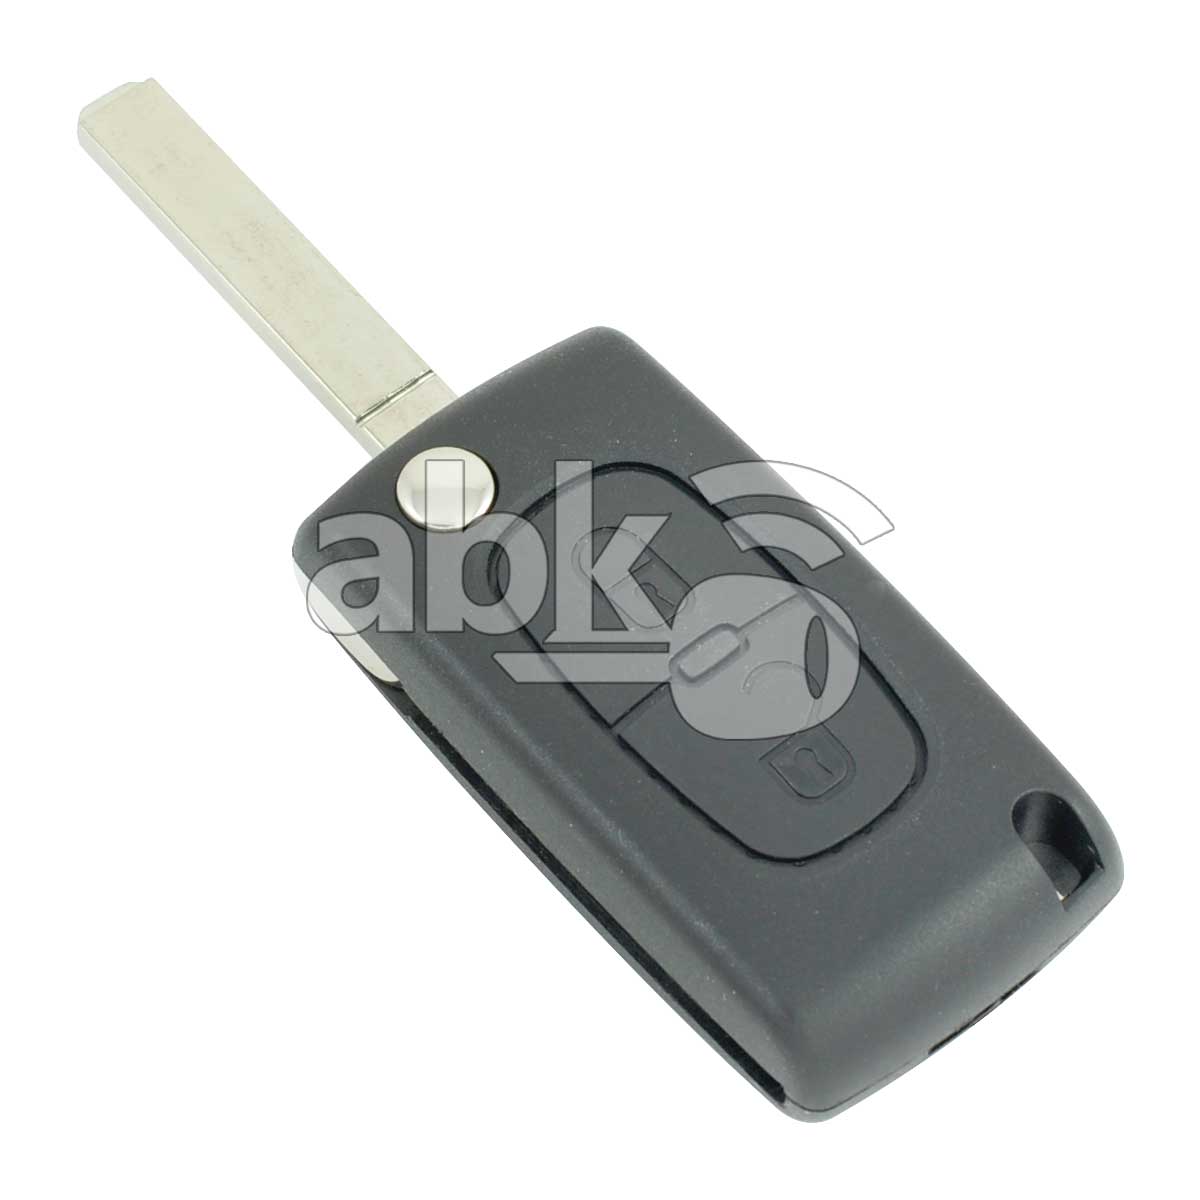 Va2/hu83 Blade 2 Buttons Remote Car Key Fob Ask Fsk For Peugeot